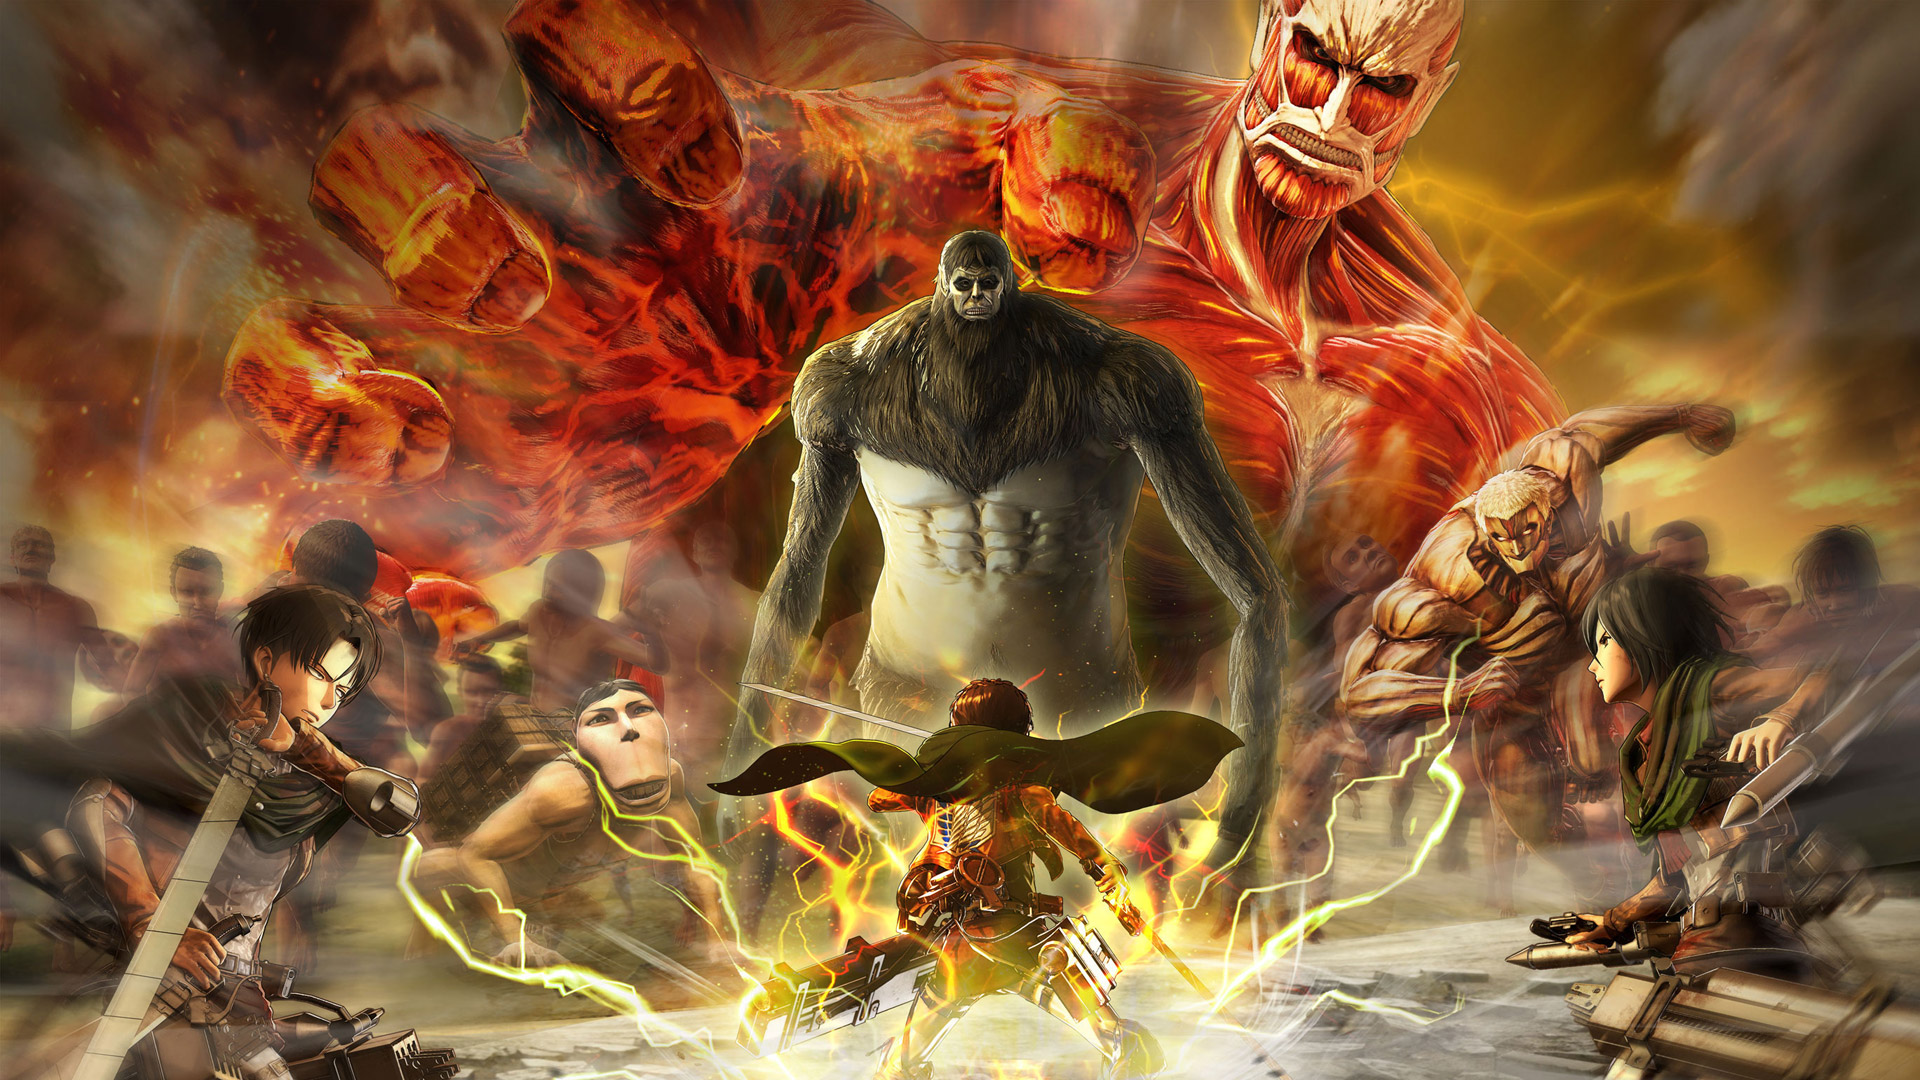 attack on titan wallpaper,games,cg artwork,demon,action adventure game,mythology